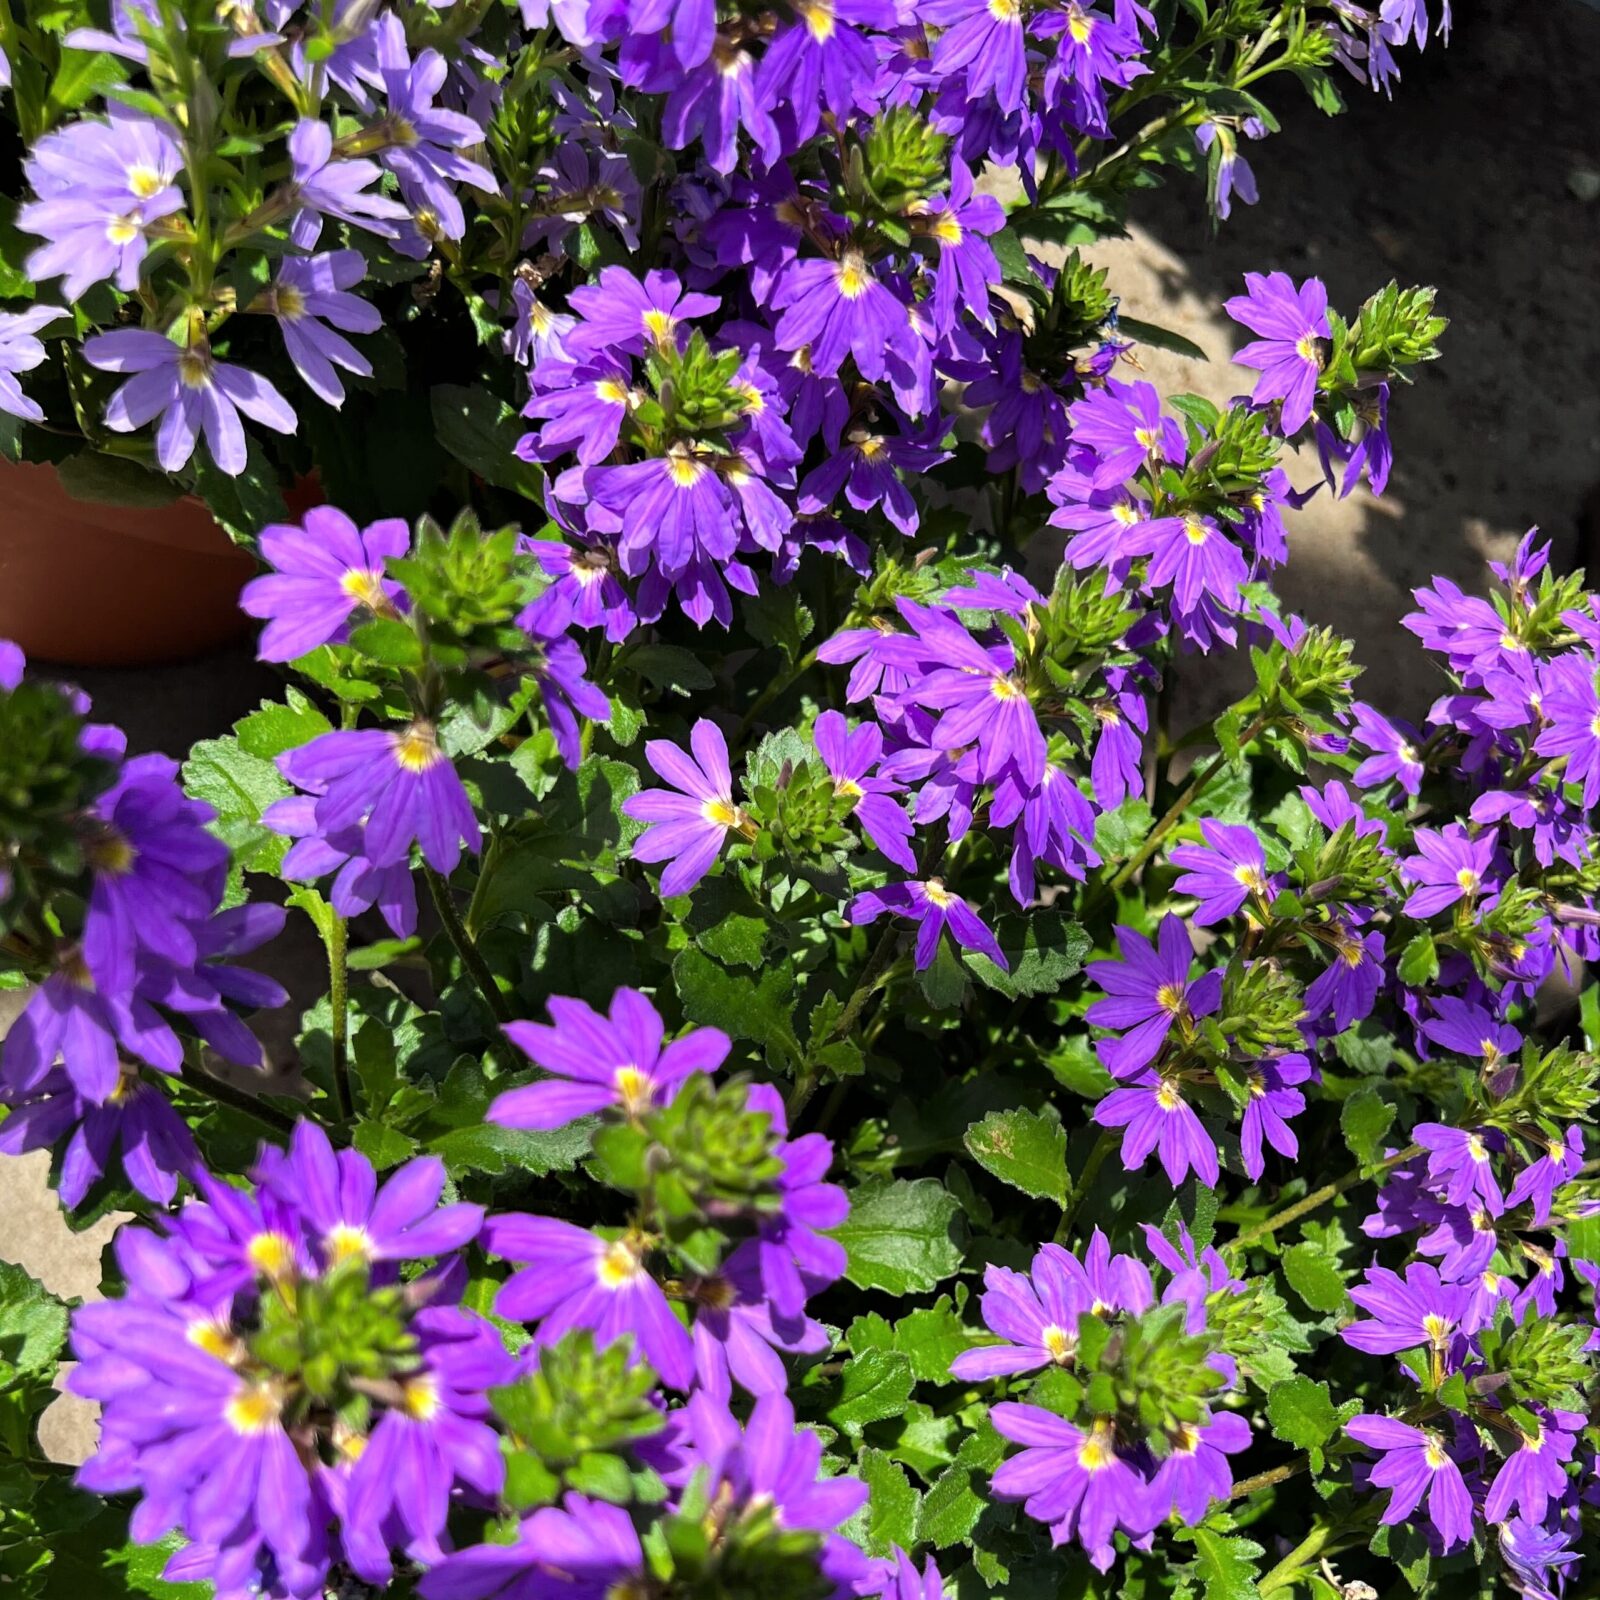 Greenstreet Growers Wholesale Landscape Supply Finished Production Plants Annual Scaevola Fan Flower Purple Blue